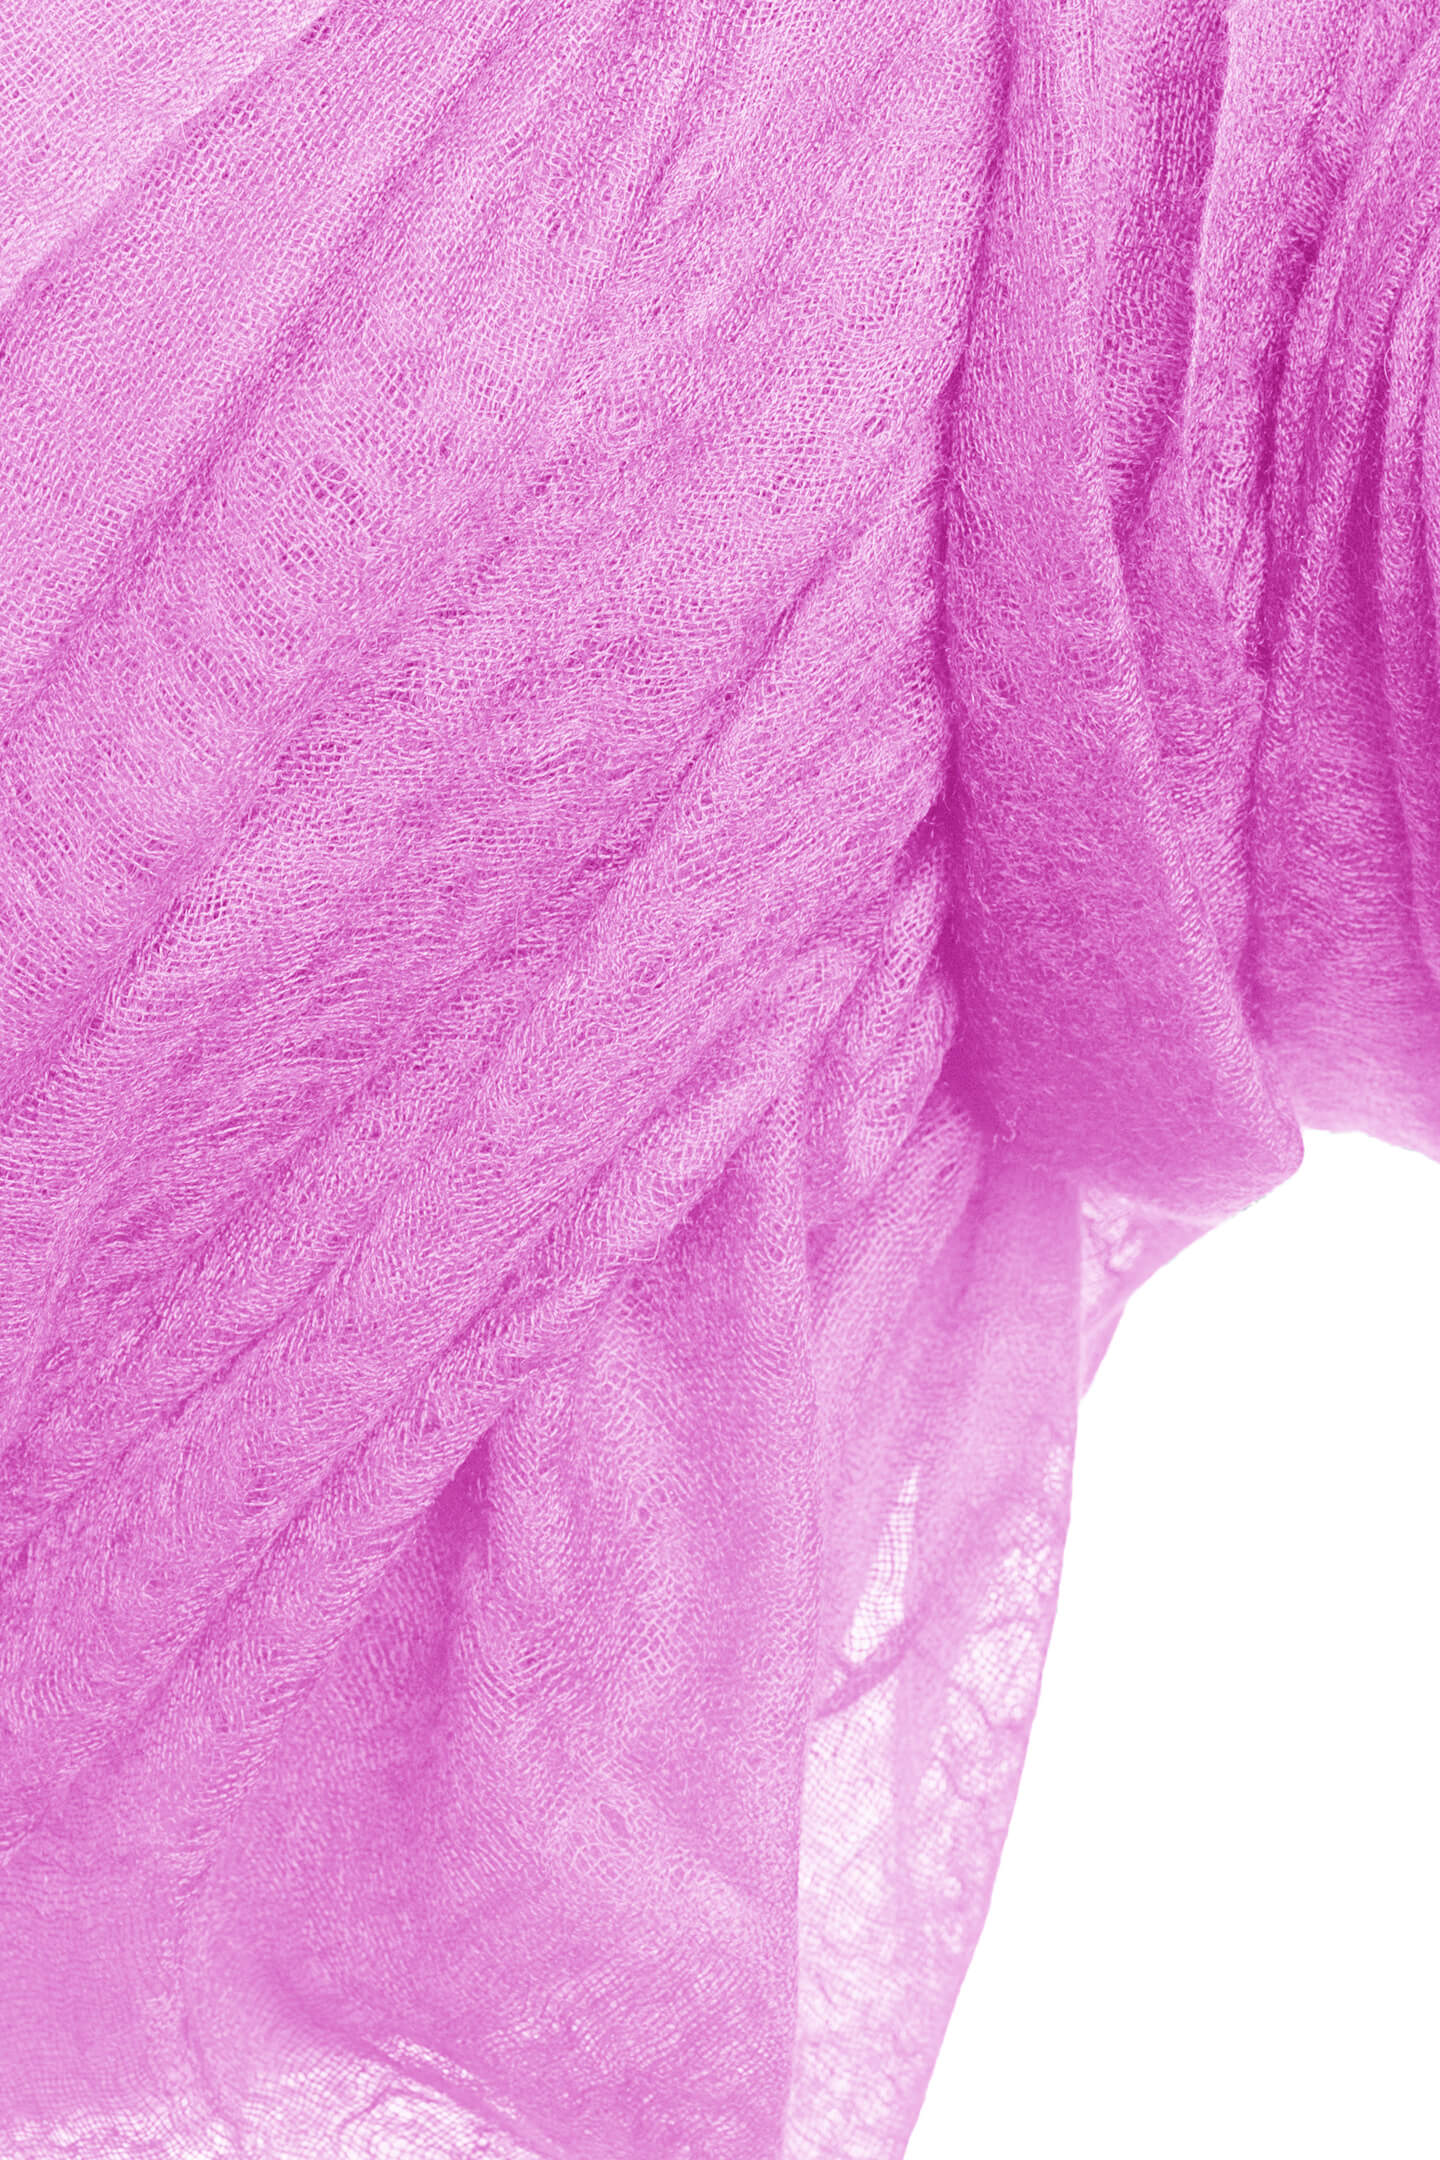 Women's Persian Pink Cashmere Scarf 100% Handmade